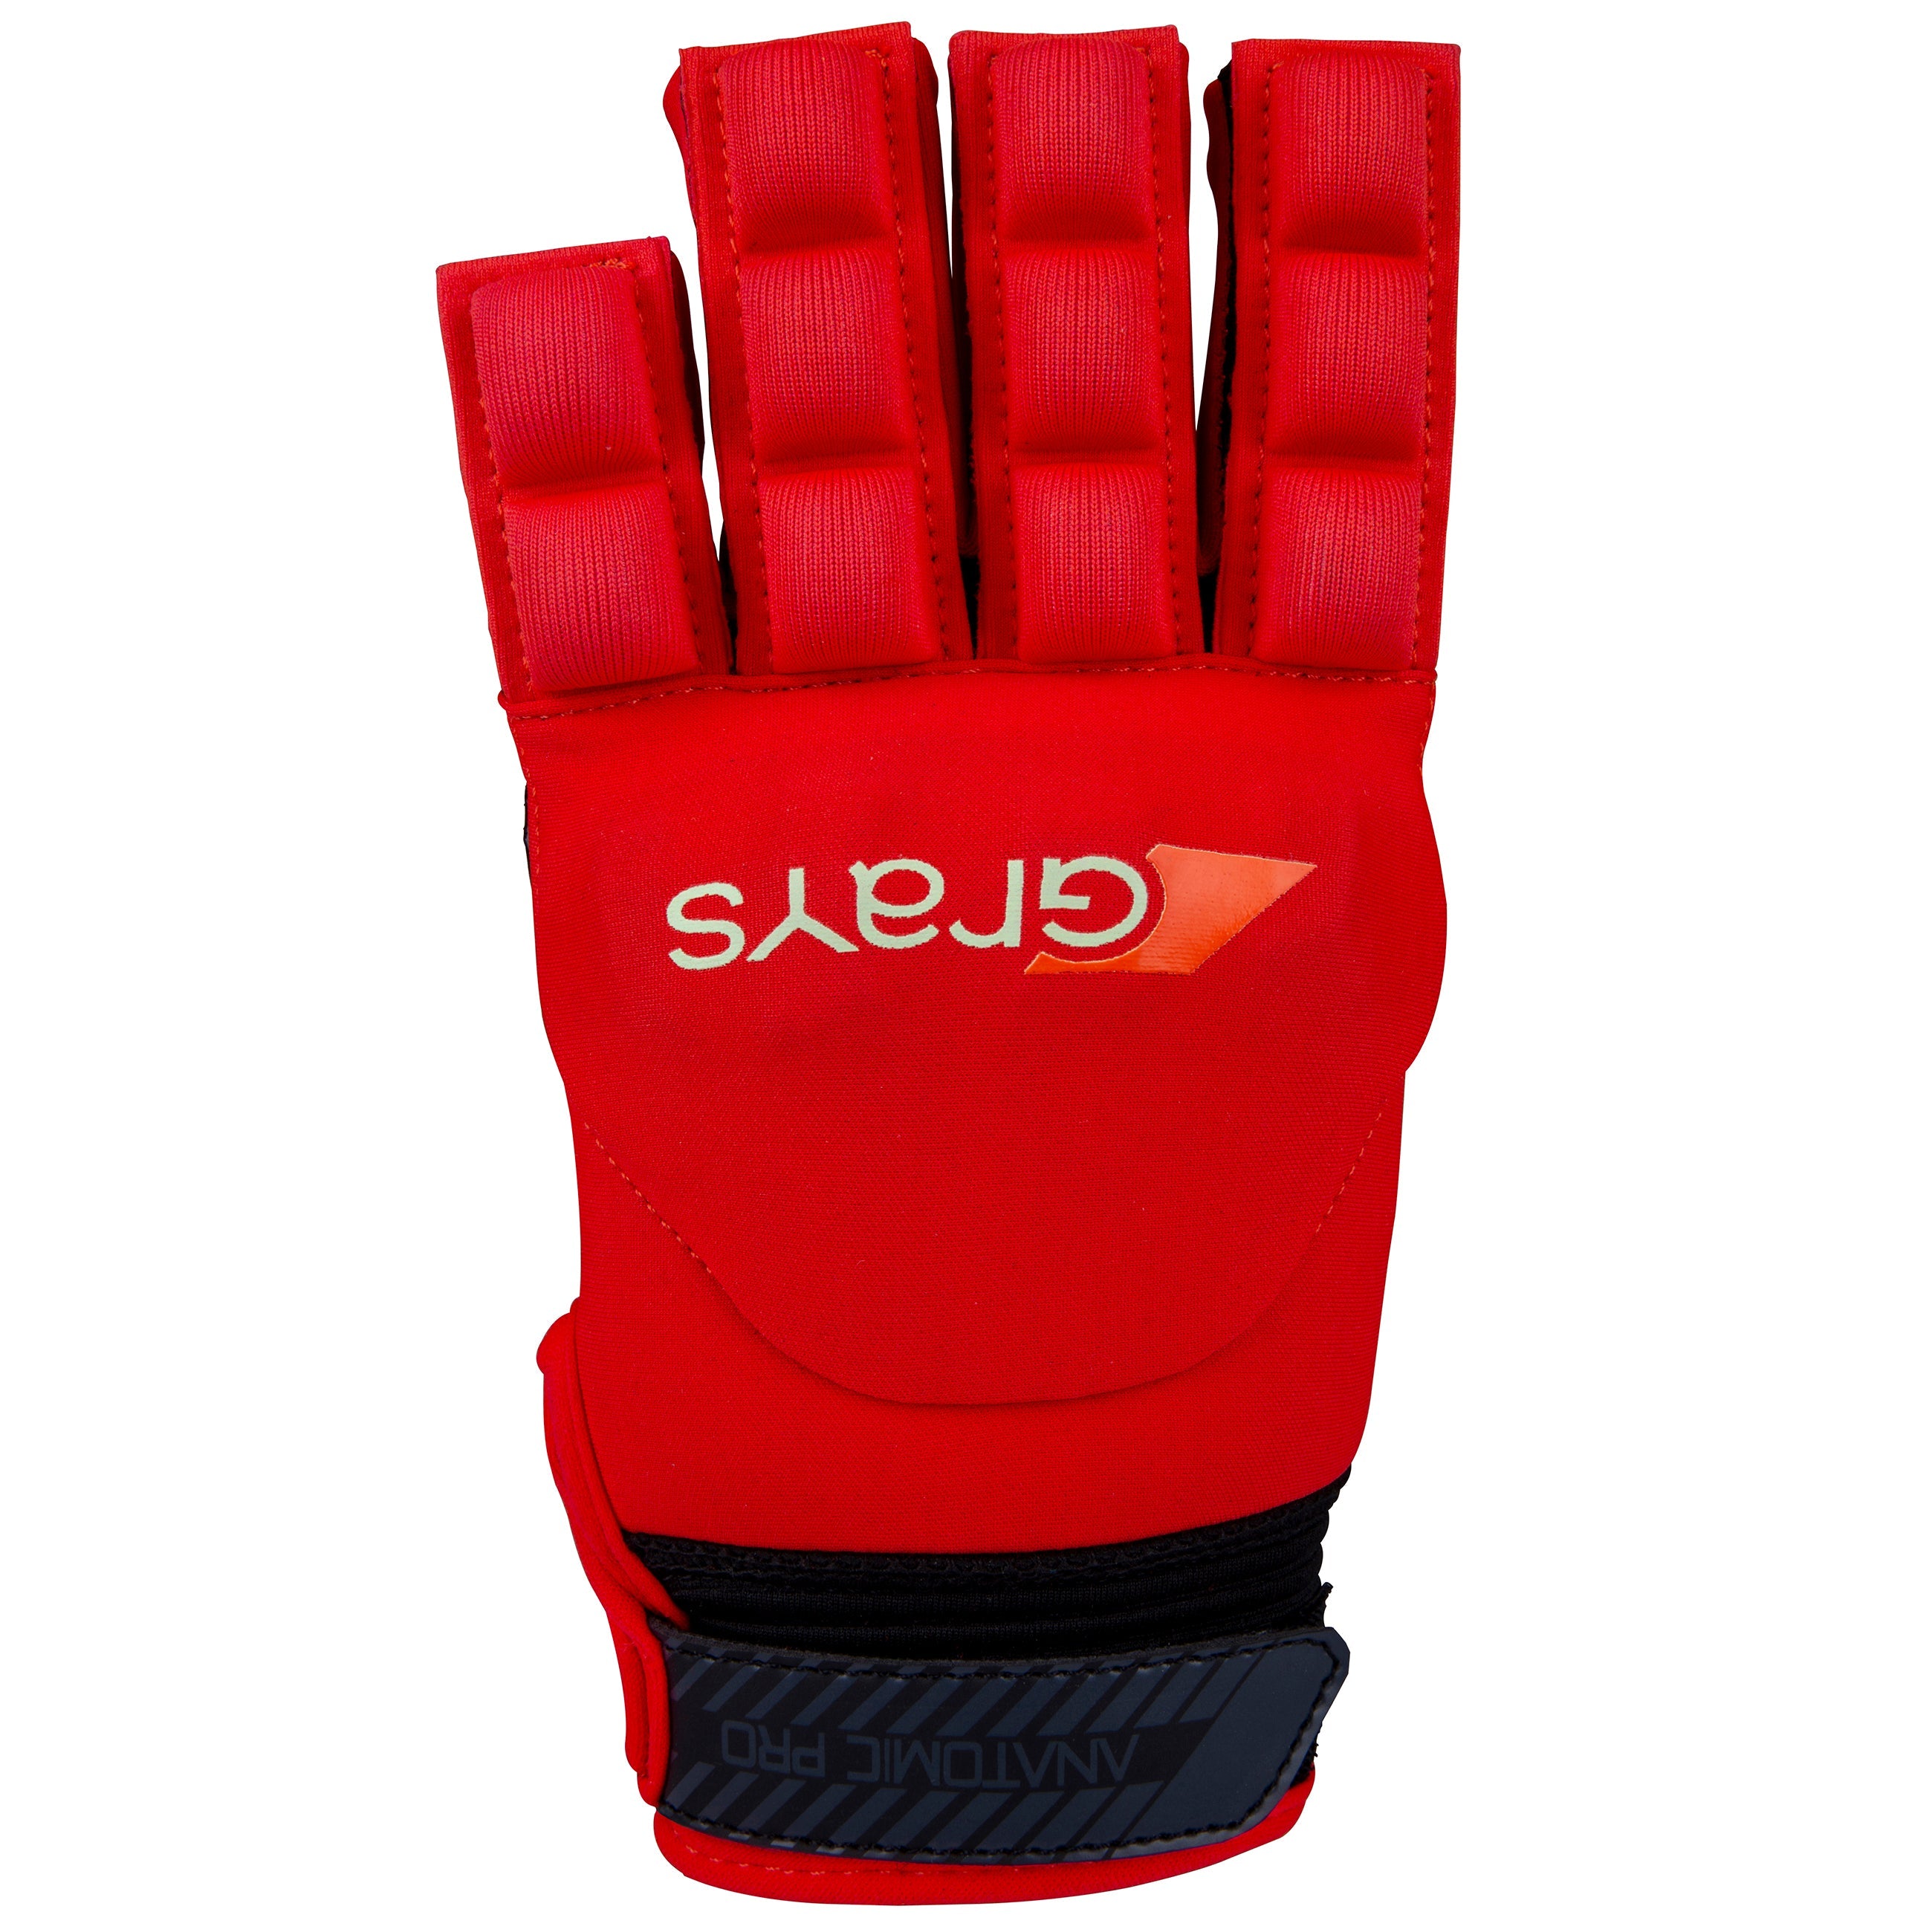 2600 HGGA19 6209305 Glove Anatomic Pro Fluo Red Left Hand Back